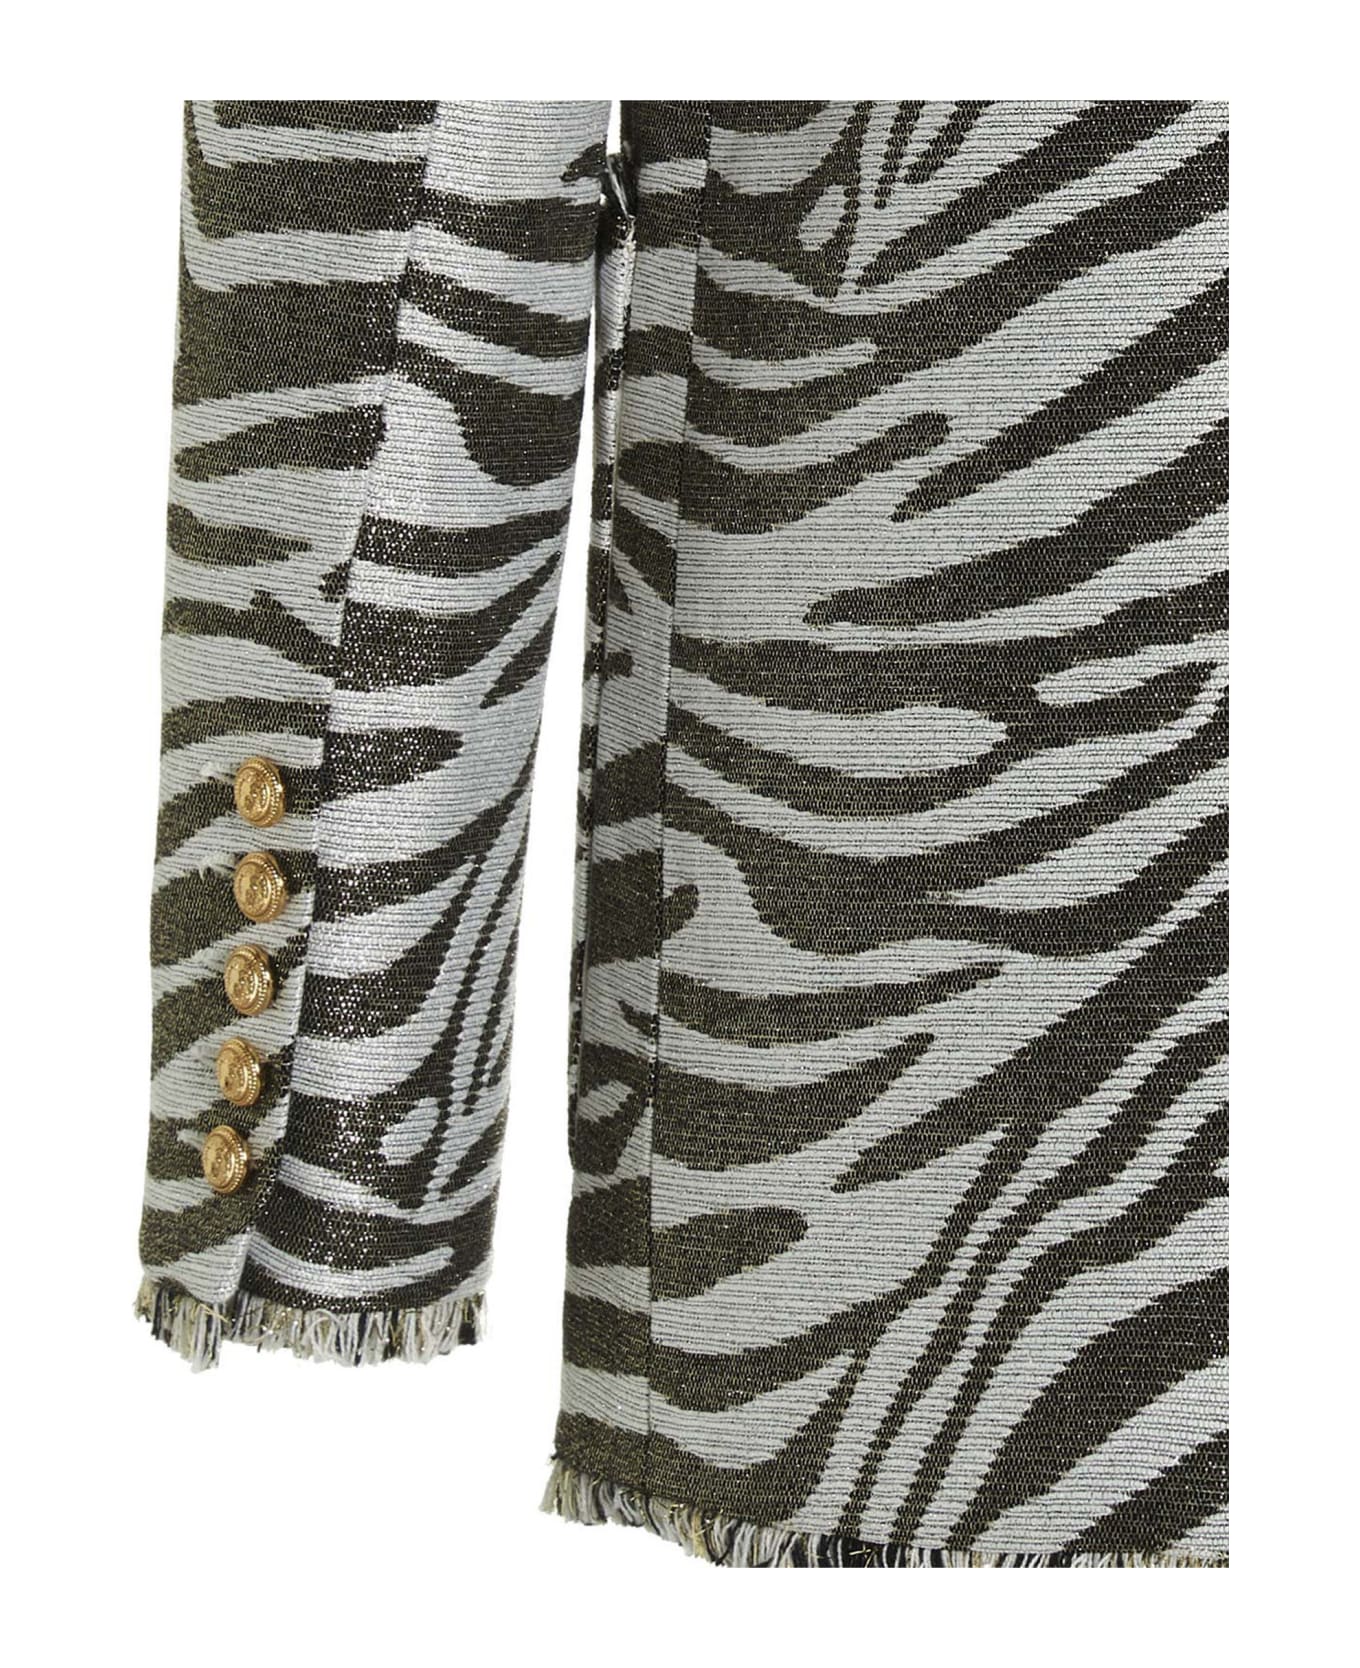 Balmain Zebra Blazer - Multicolor コート